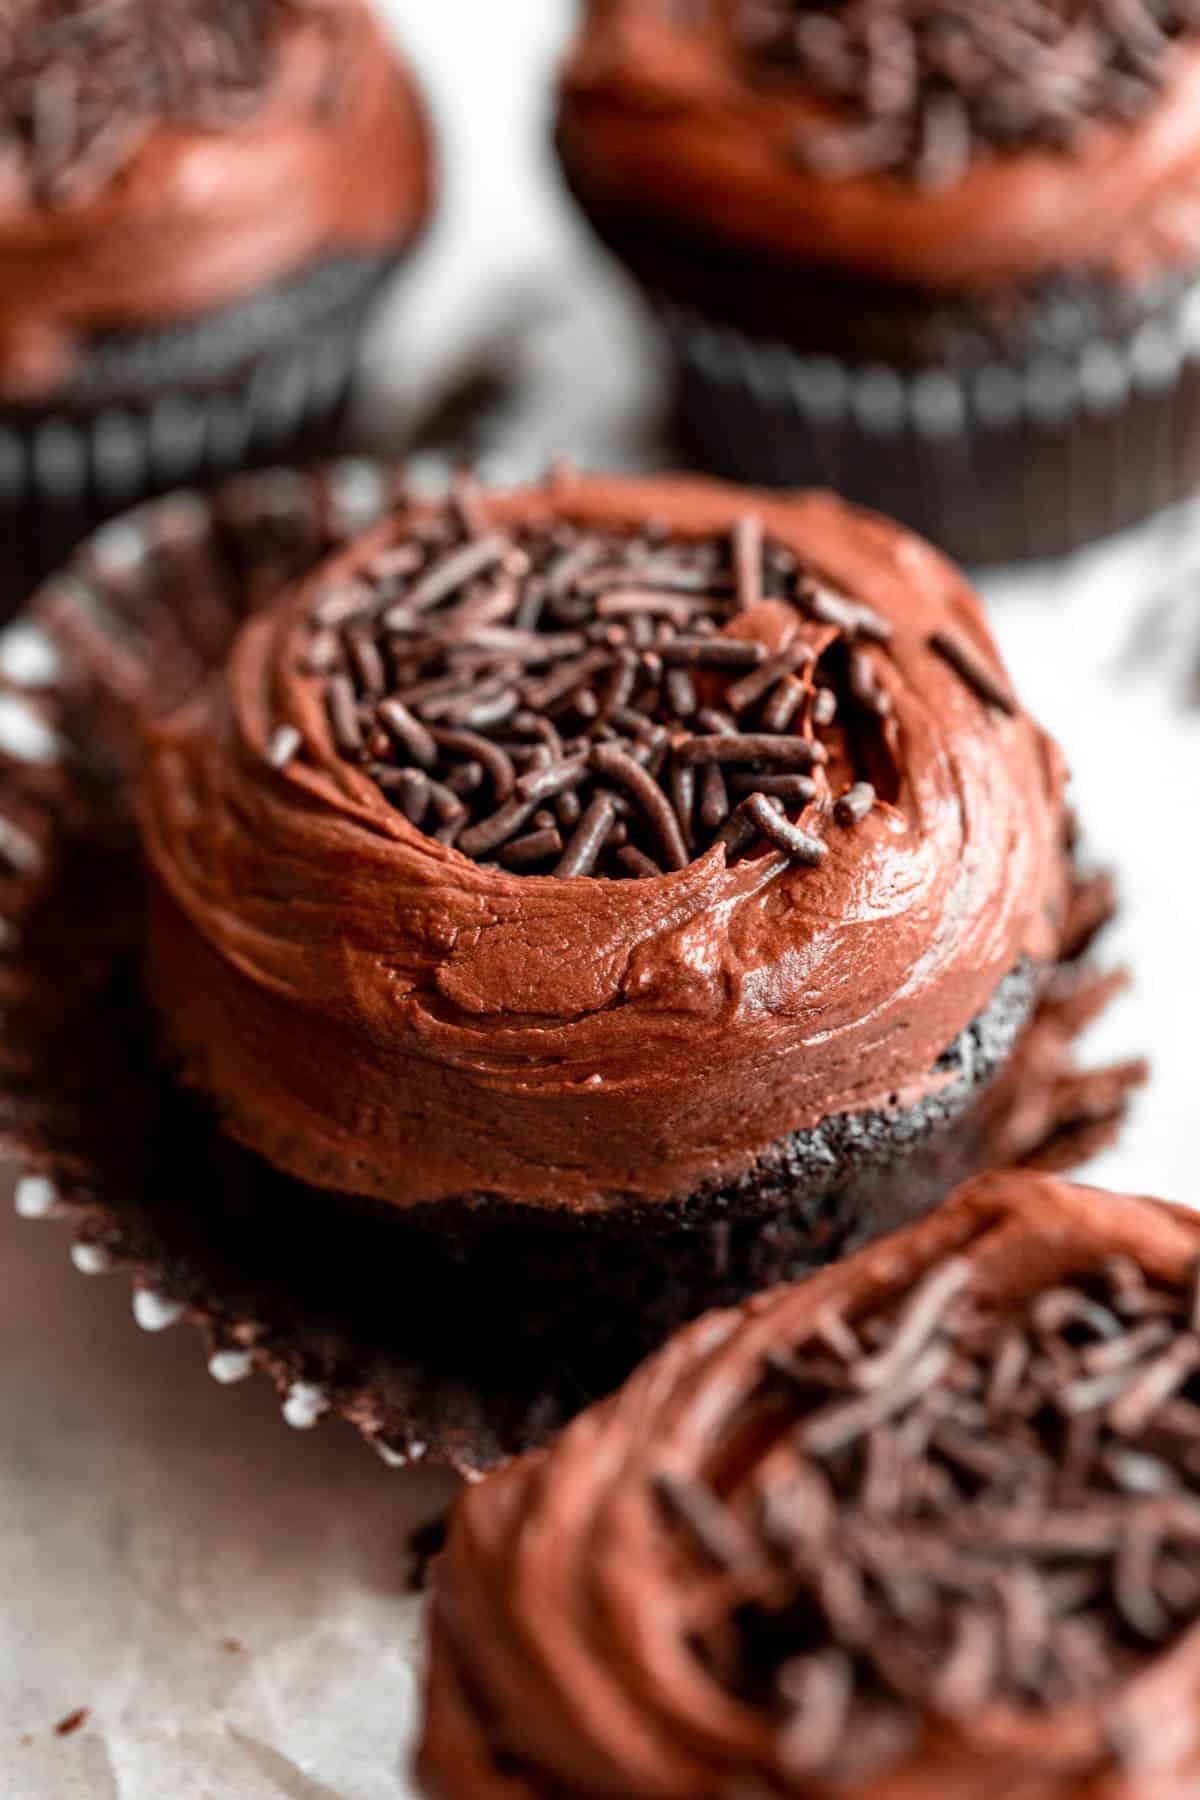 vegan buttercream on top of the chocolate cupcakes